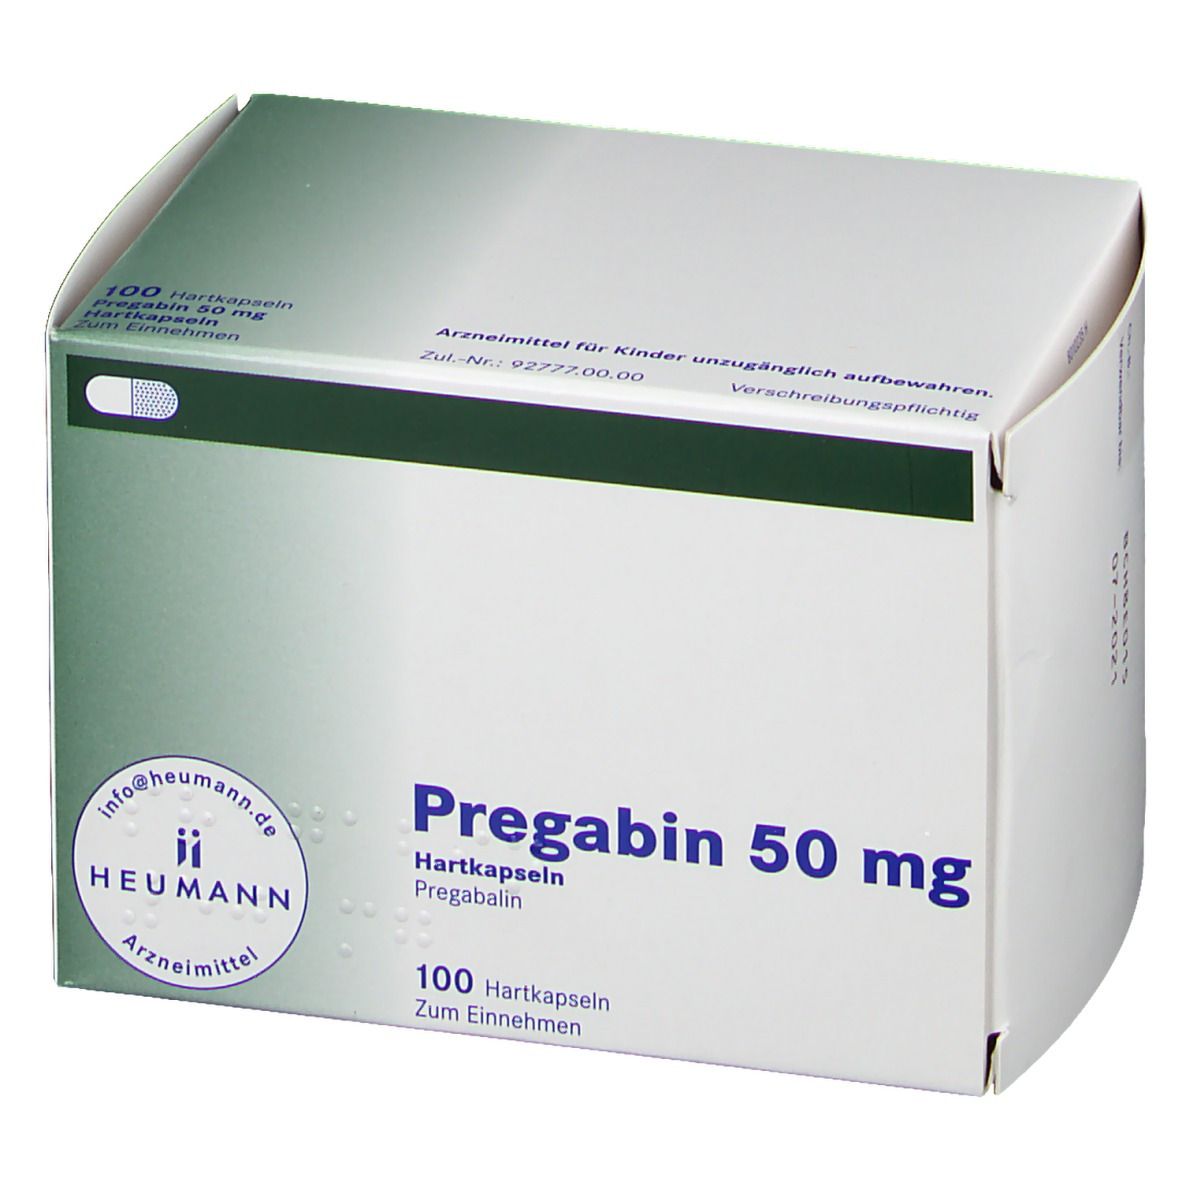 Pregabin 50 mg